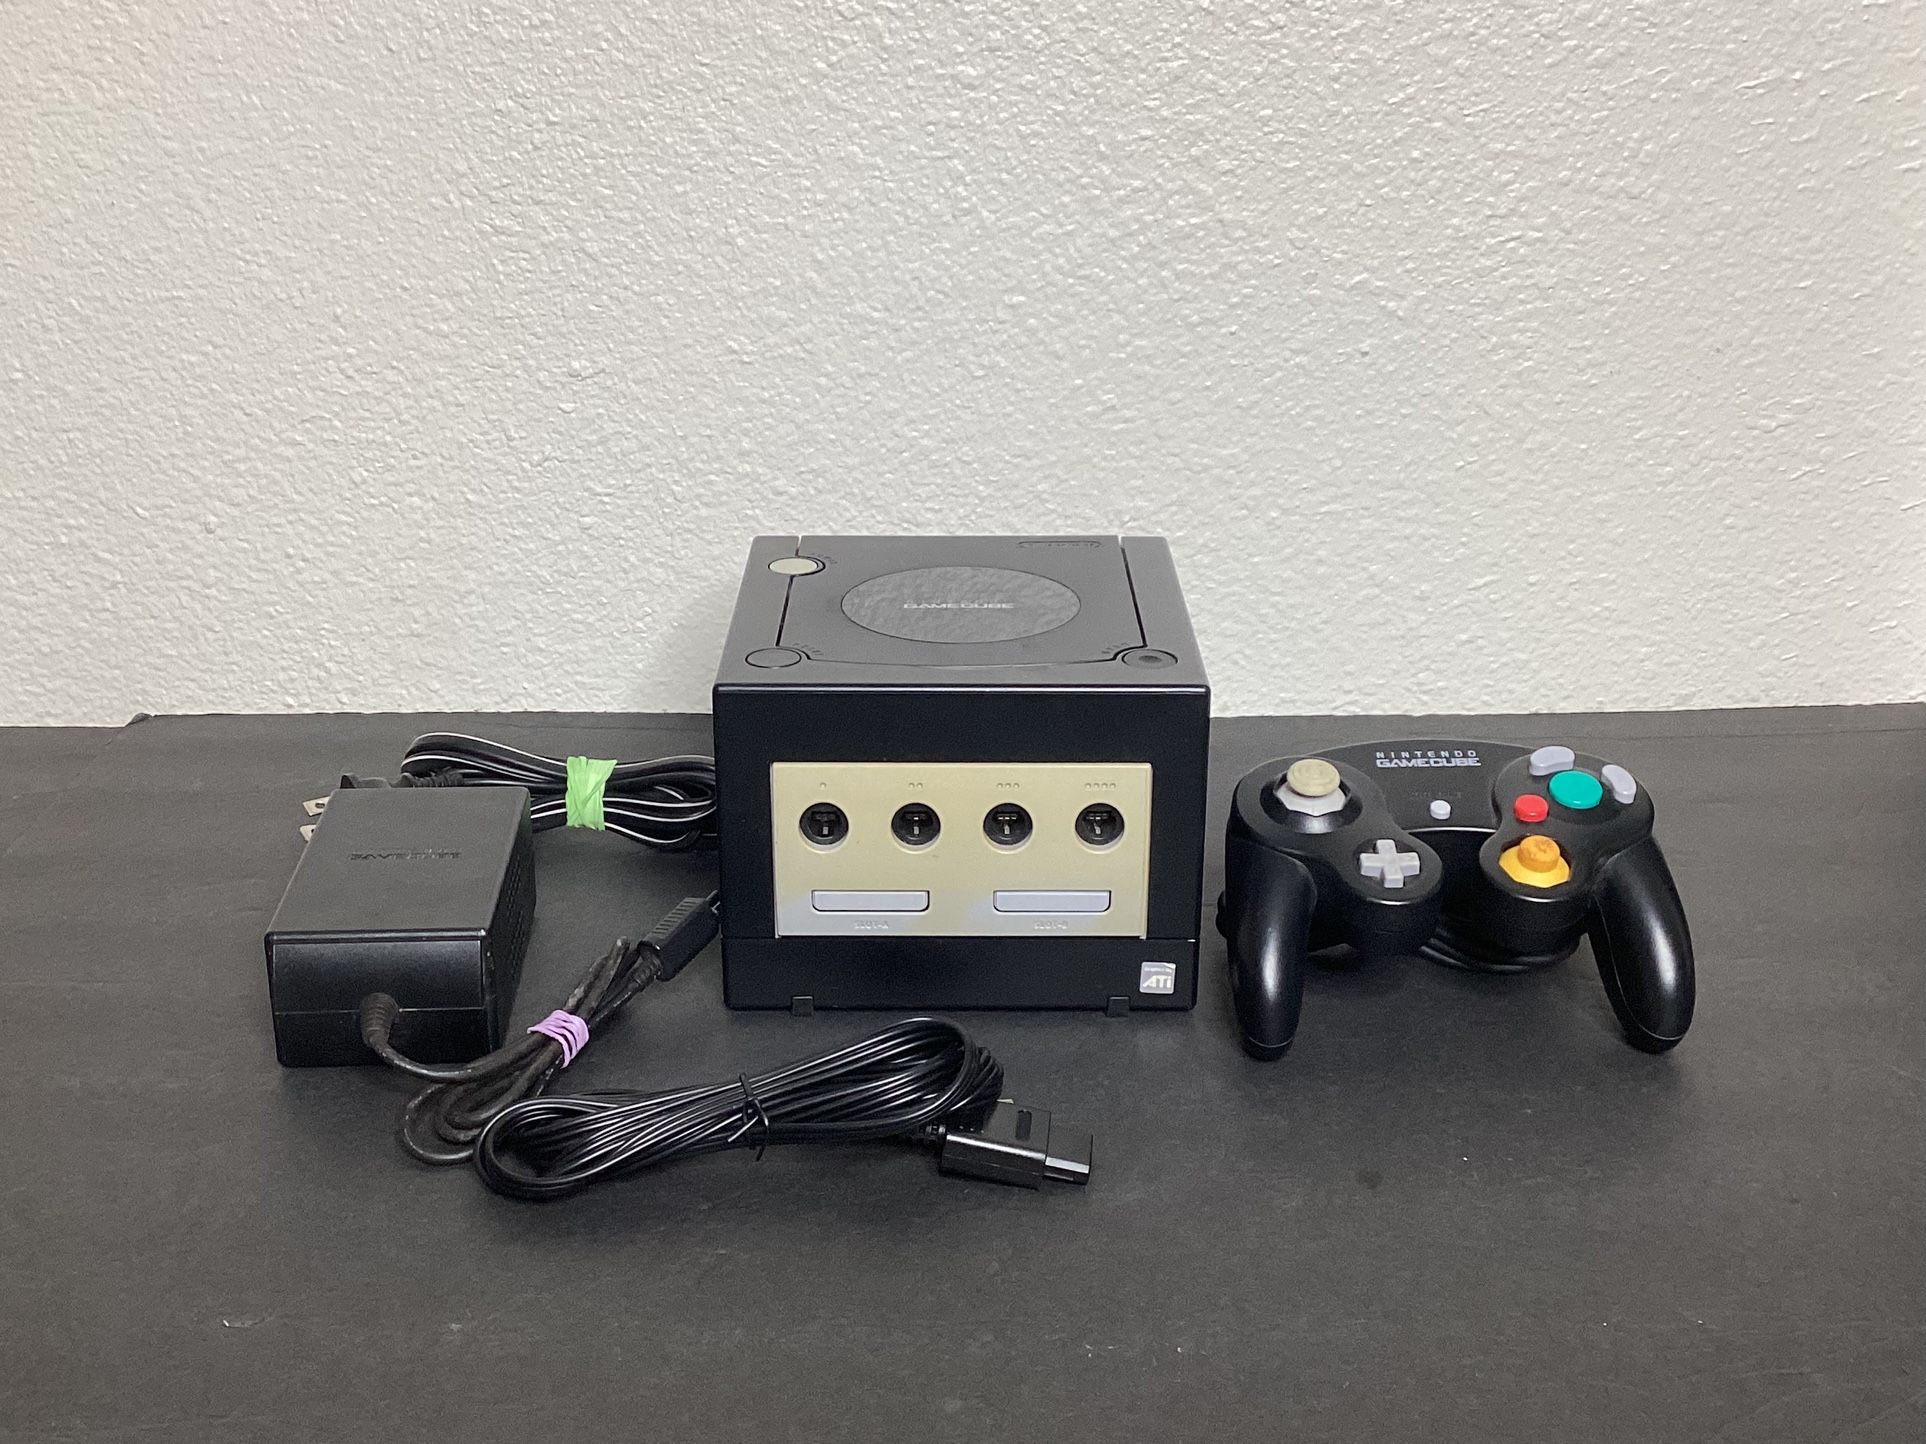 Nintendo Game Cube Console 